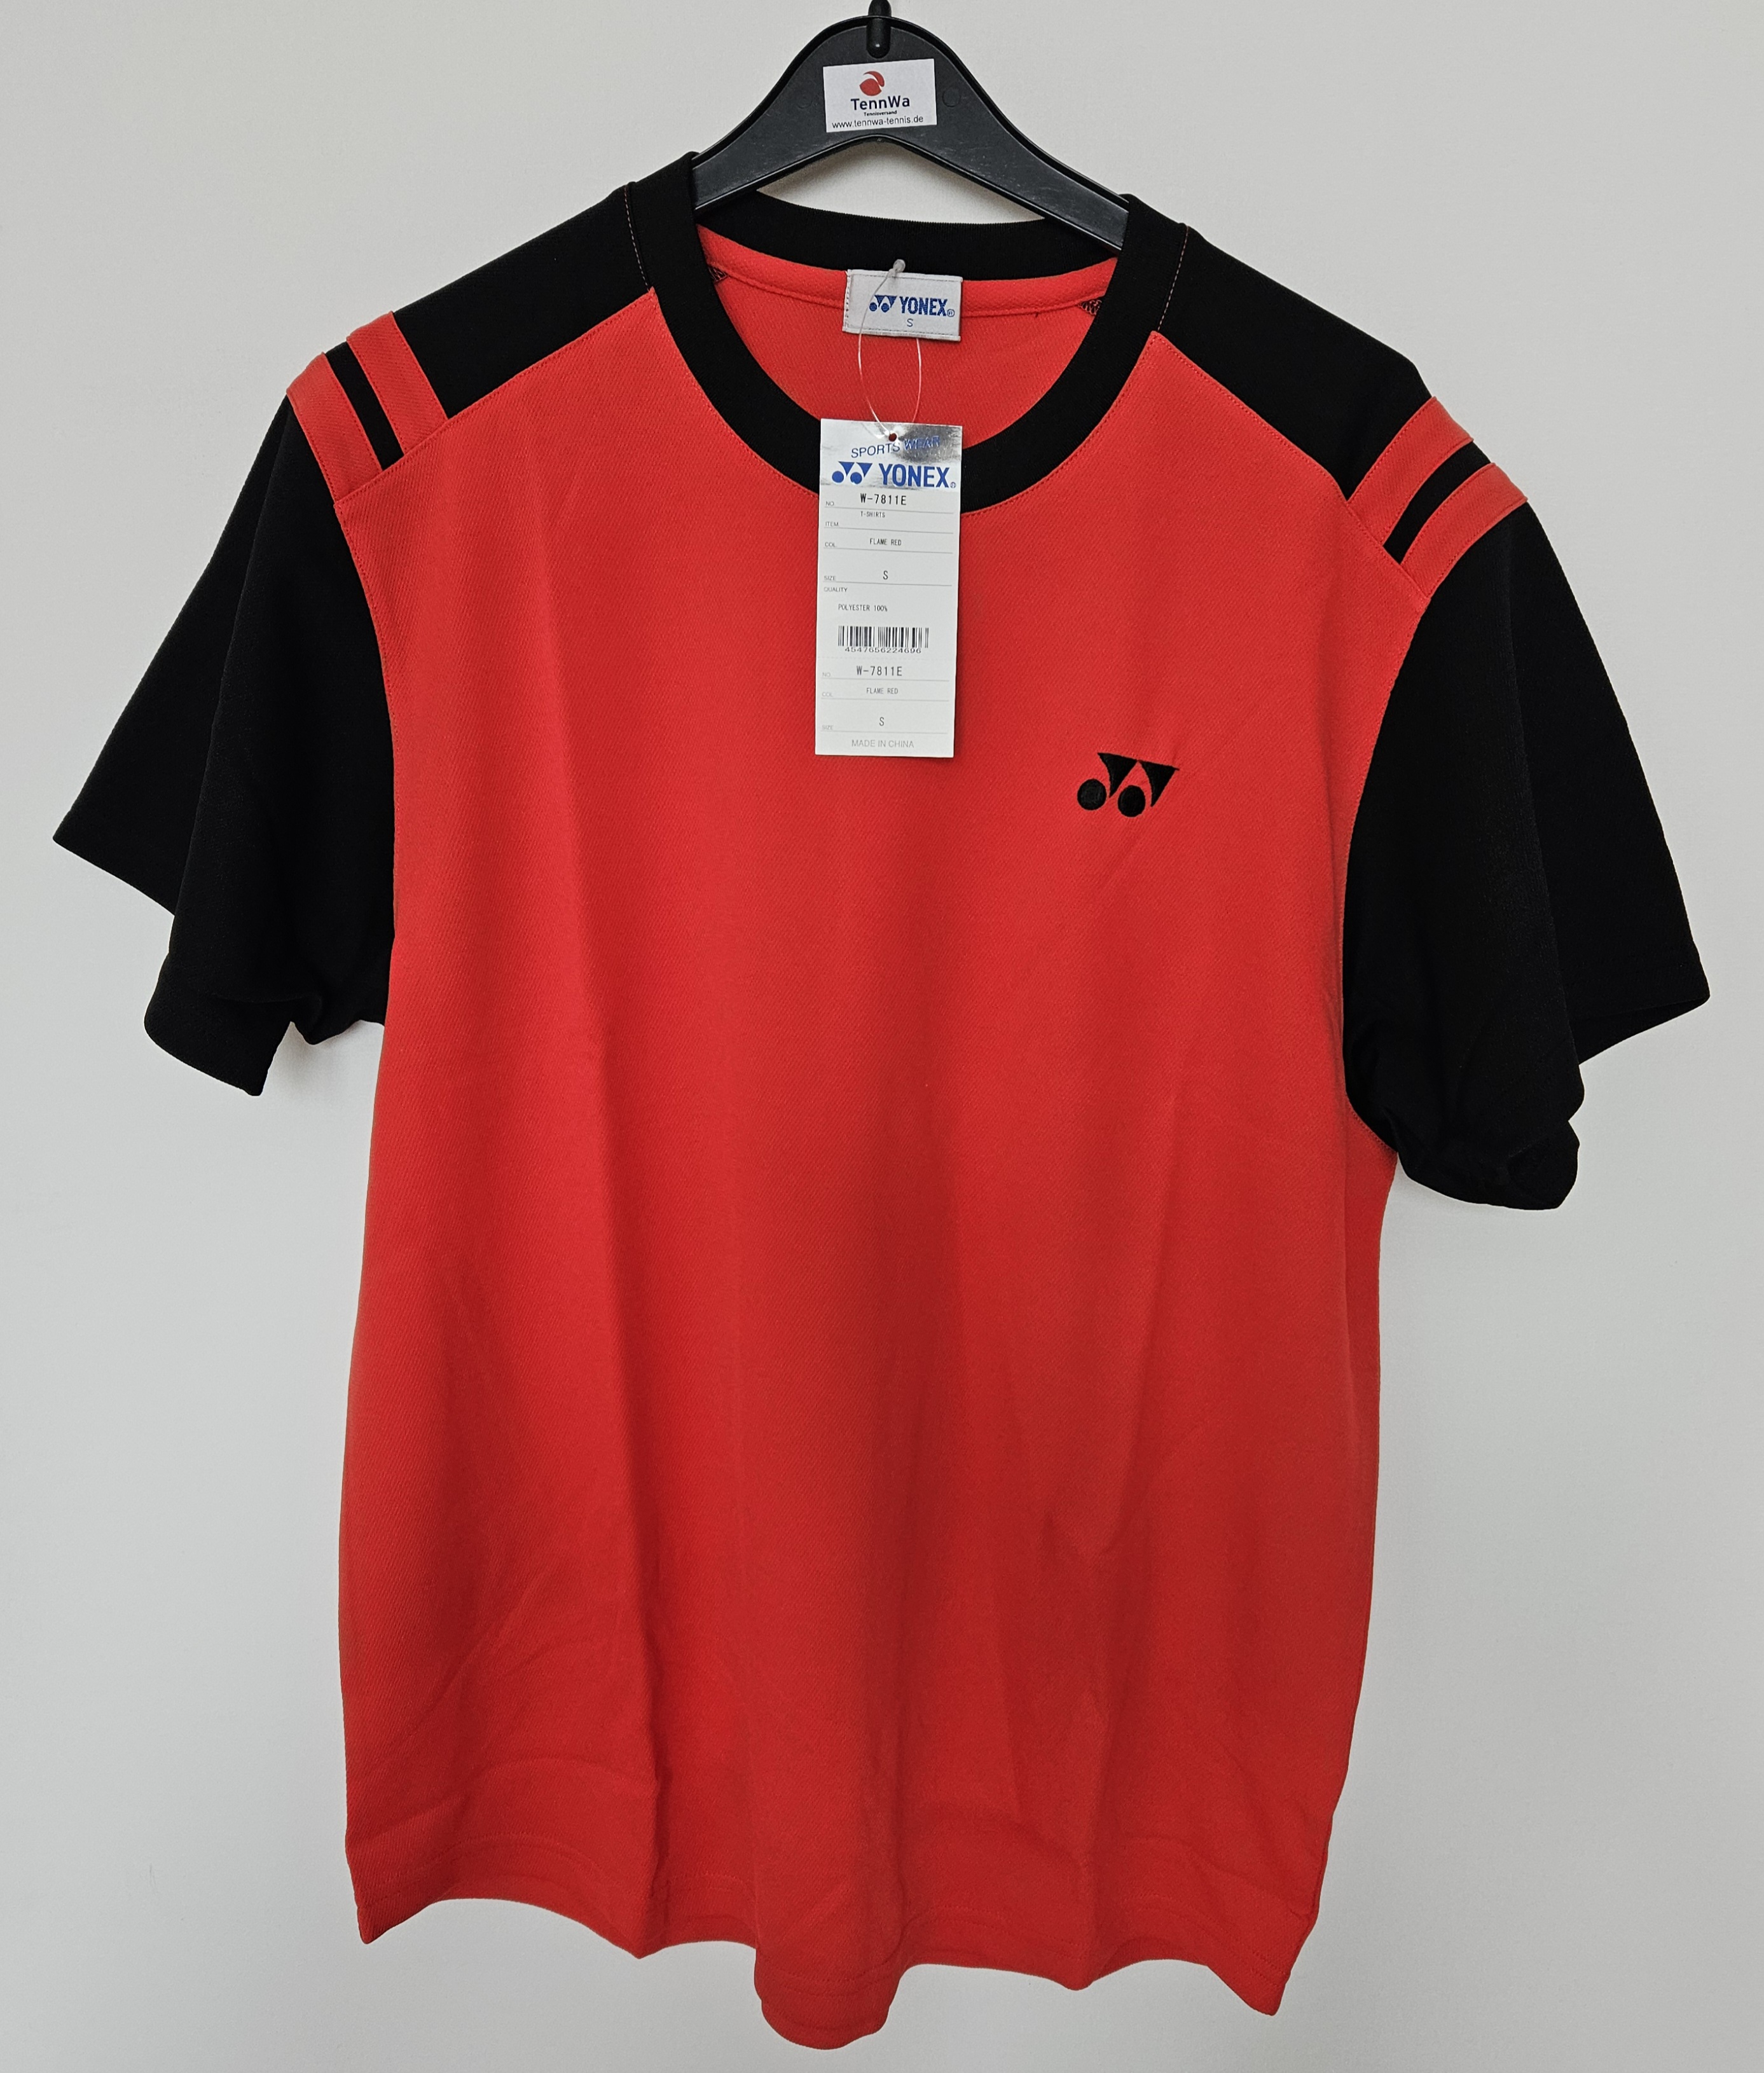 Yonex Herren/Unisex Tshirt rot/schwarz